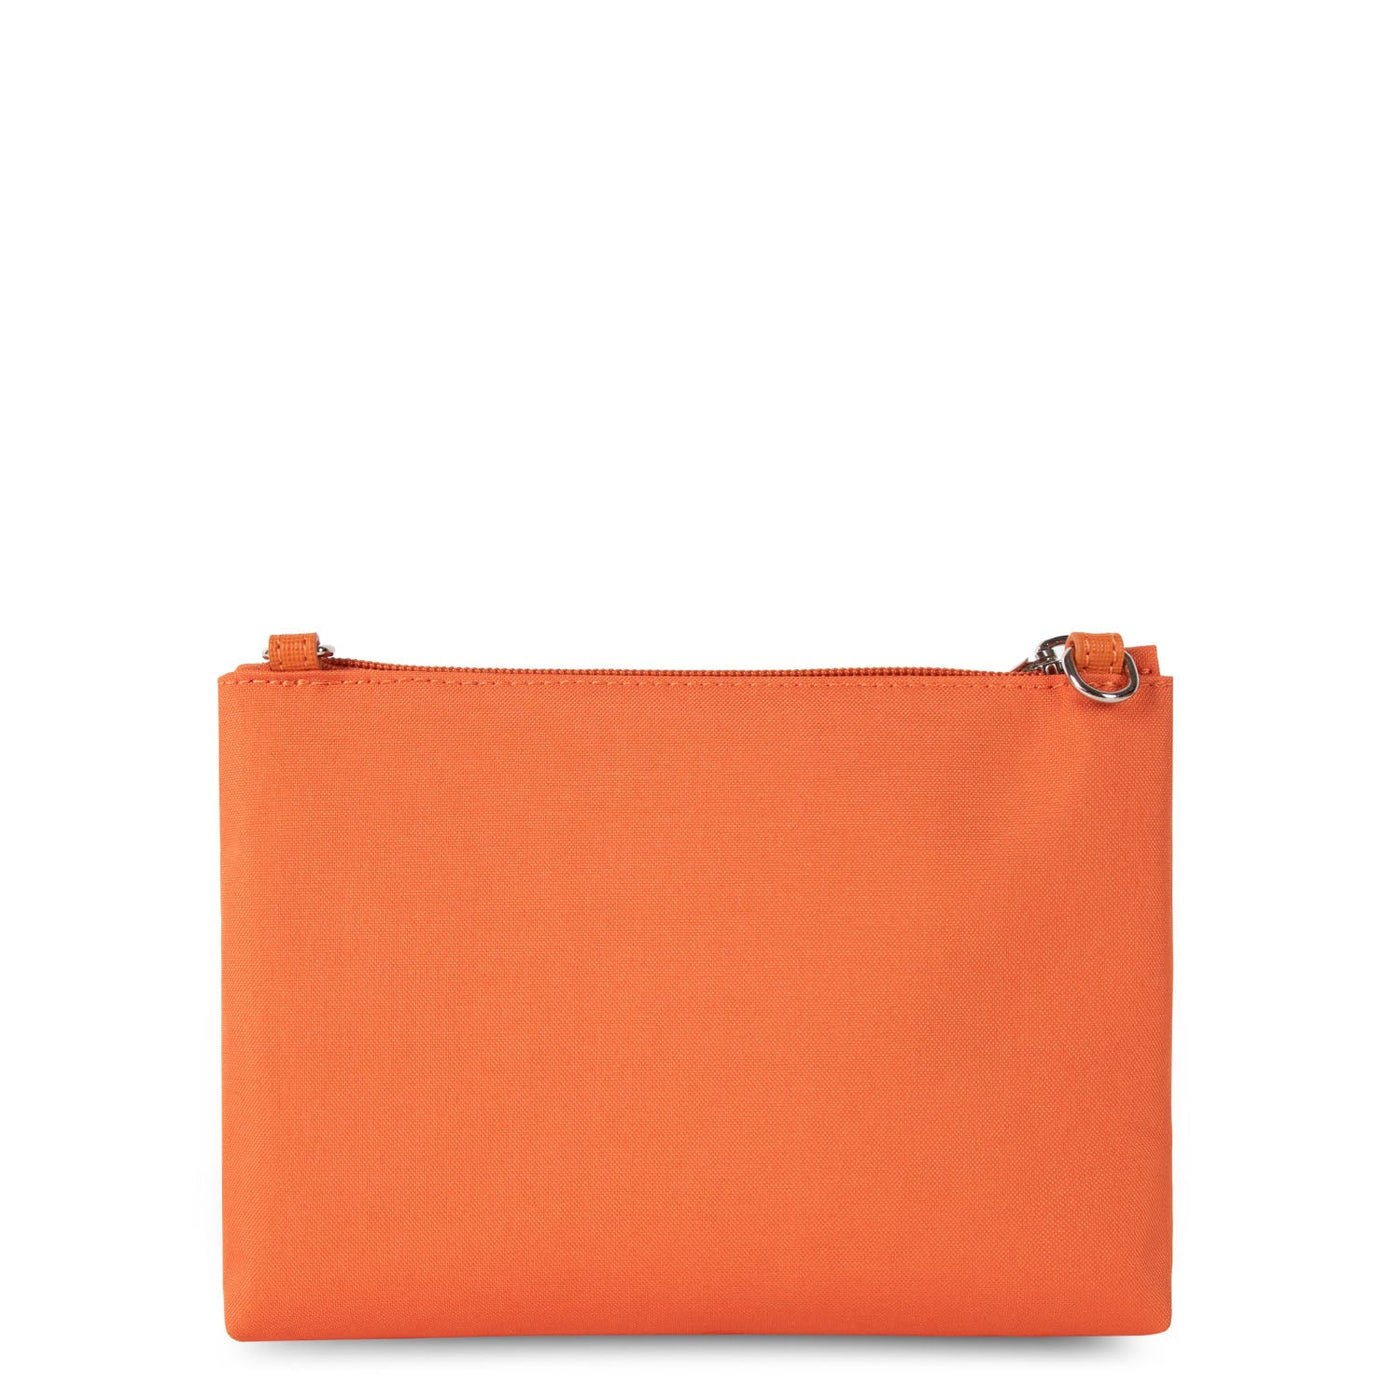 small clutch - smart kba #couleur_orange